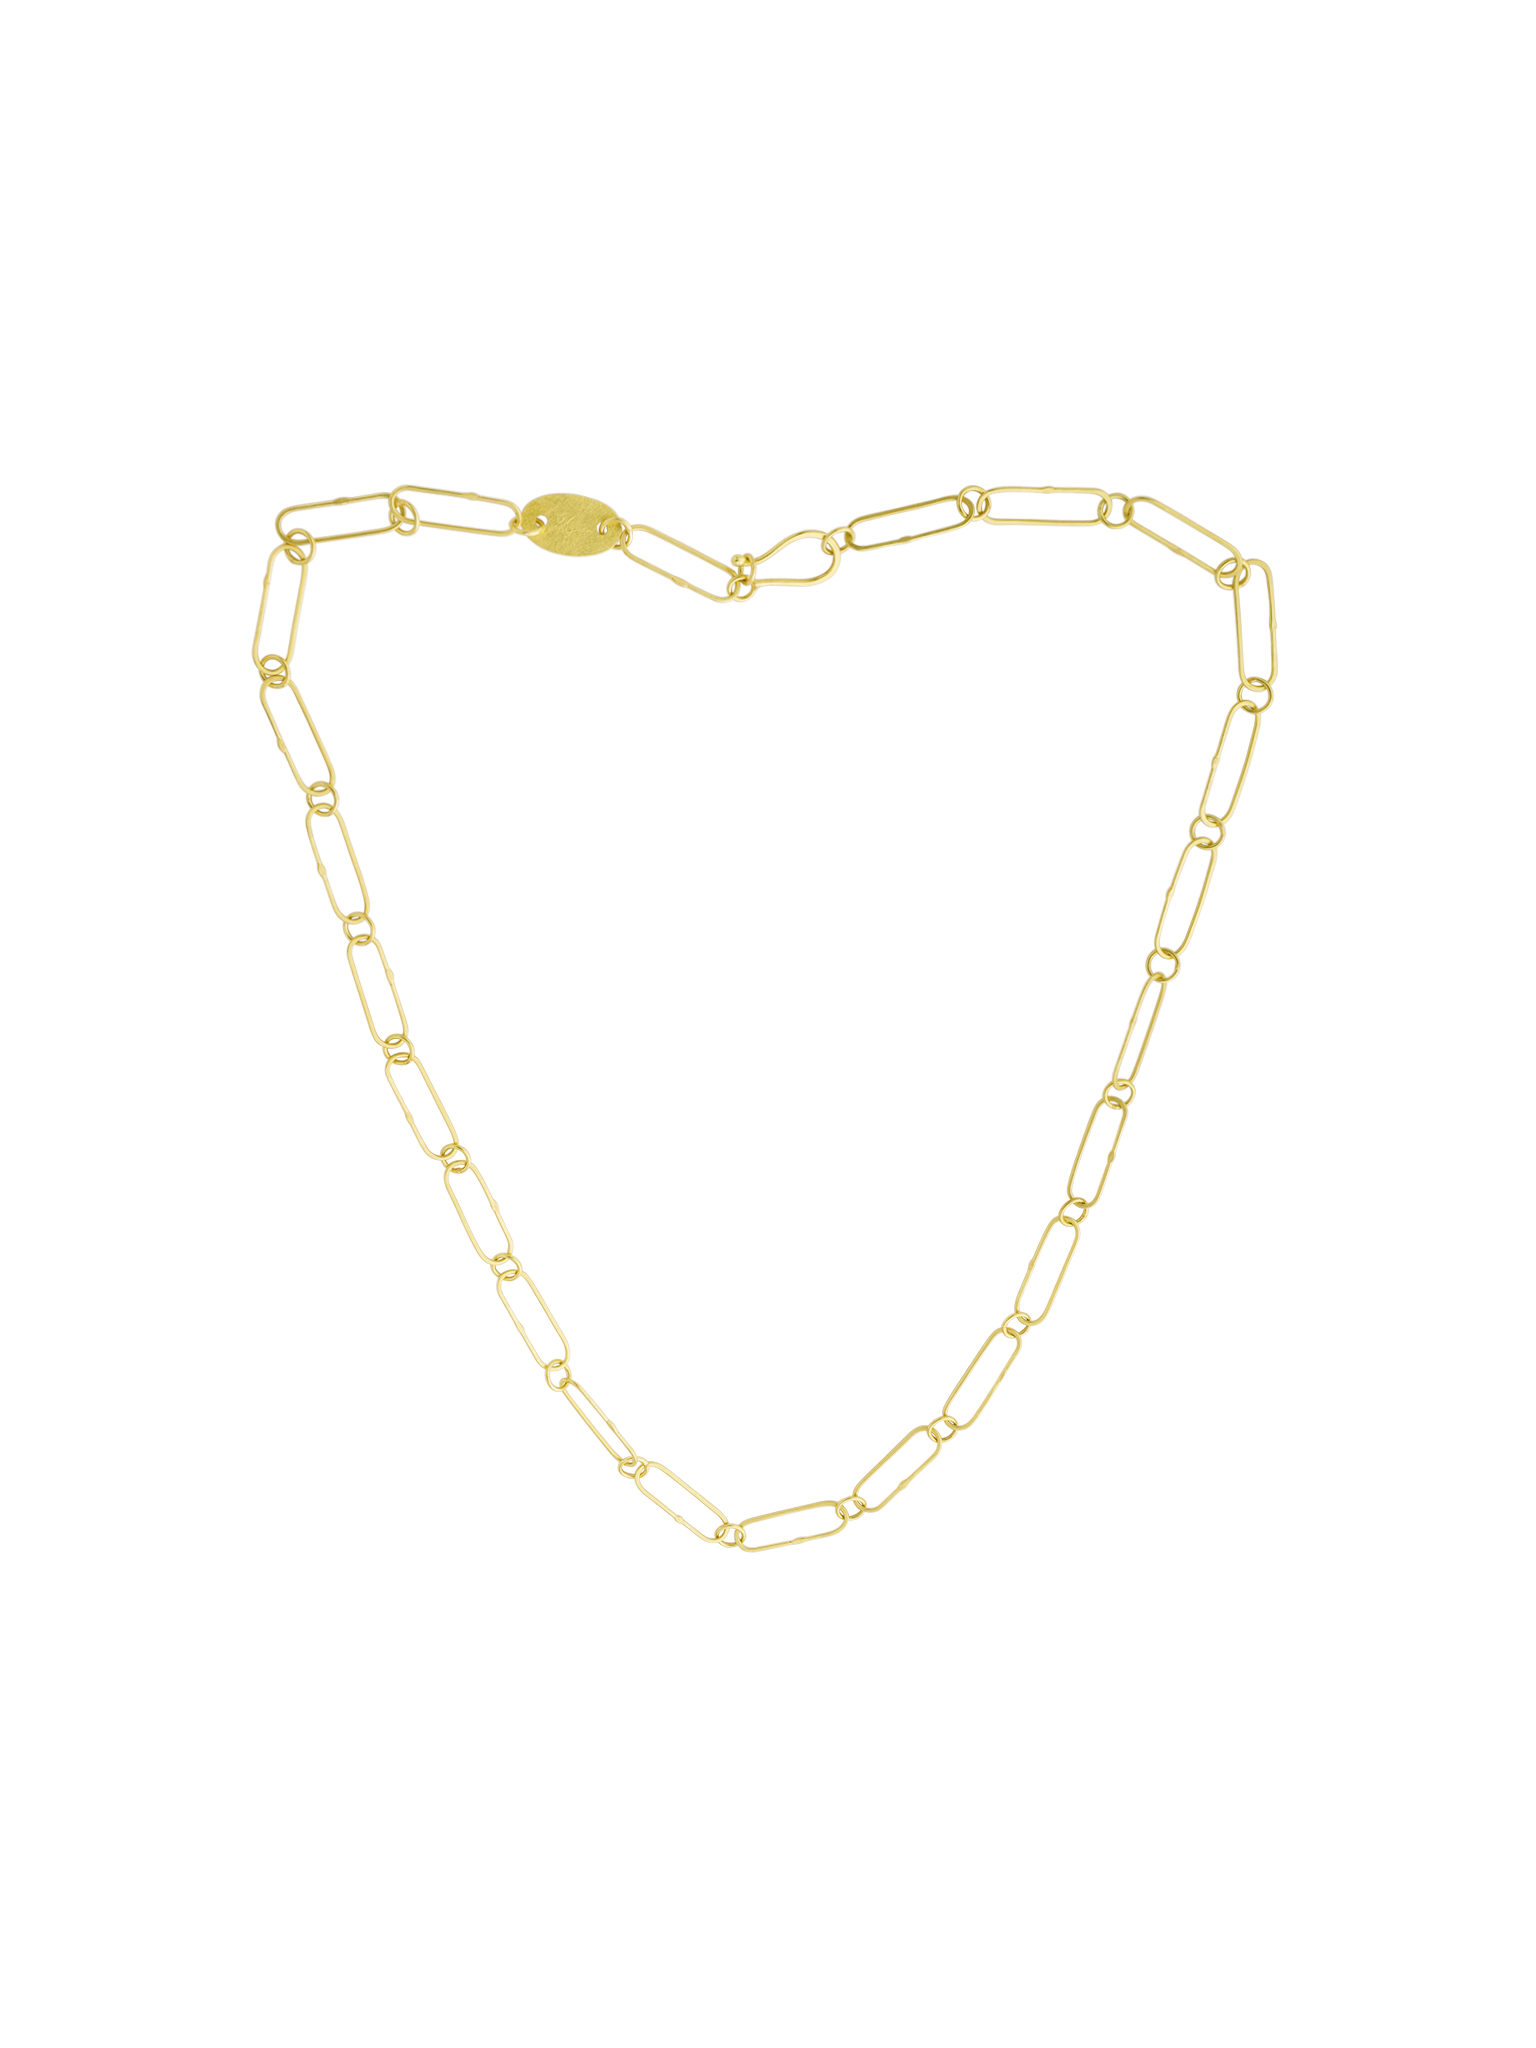 Alternate links necklace